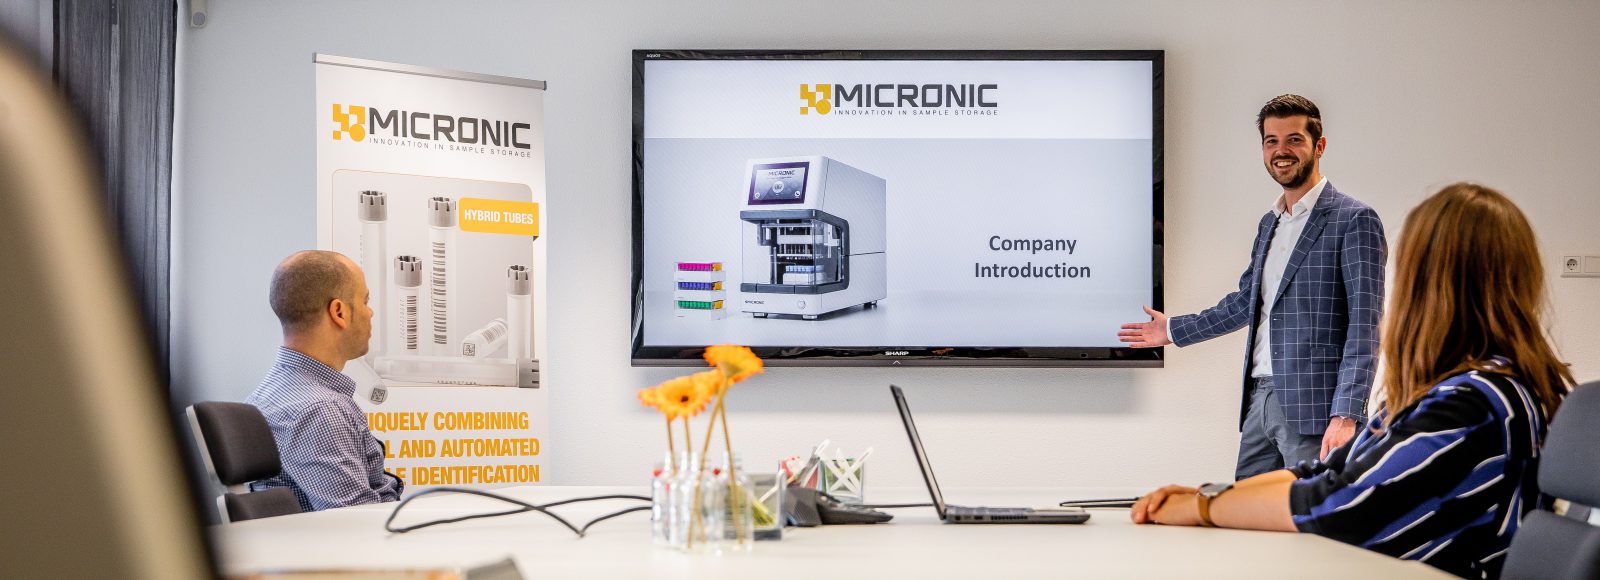 Micronic presentation